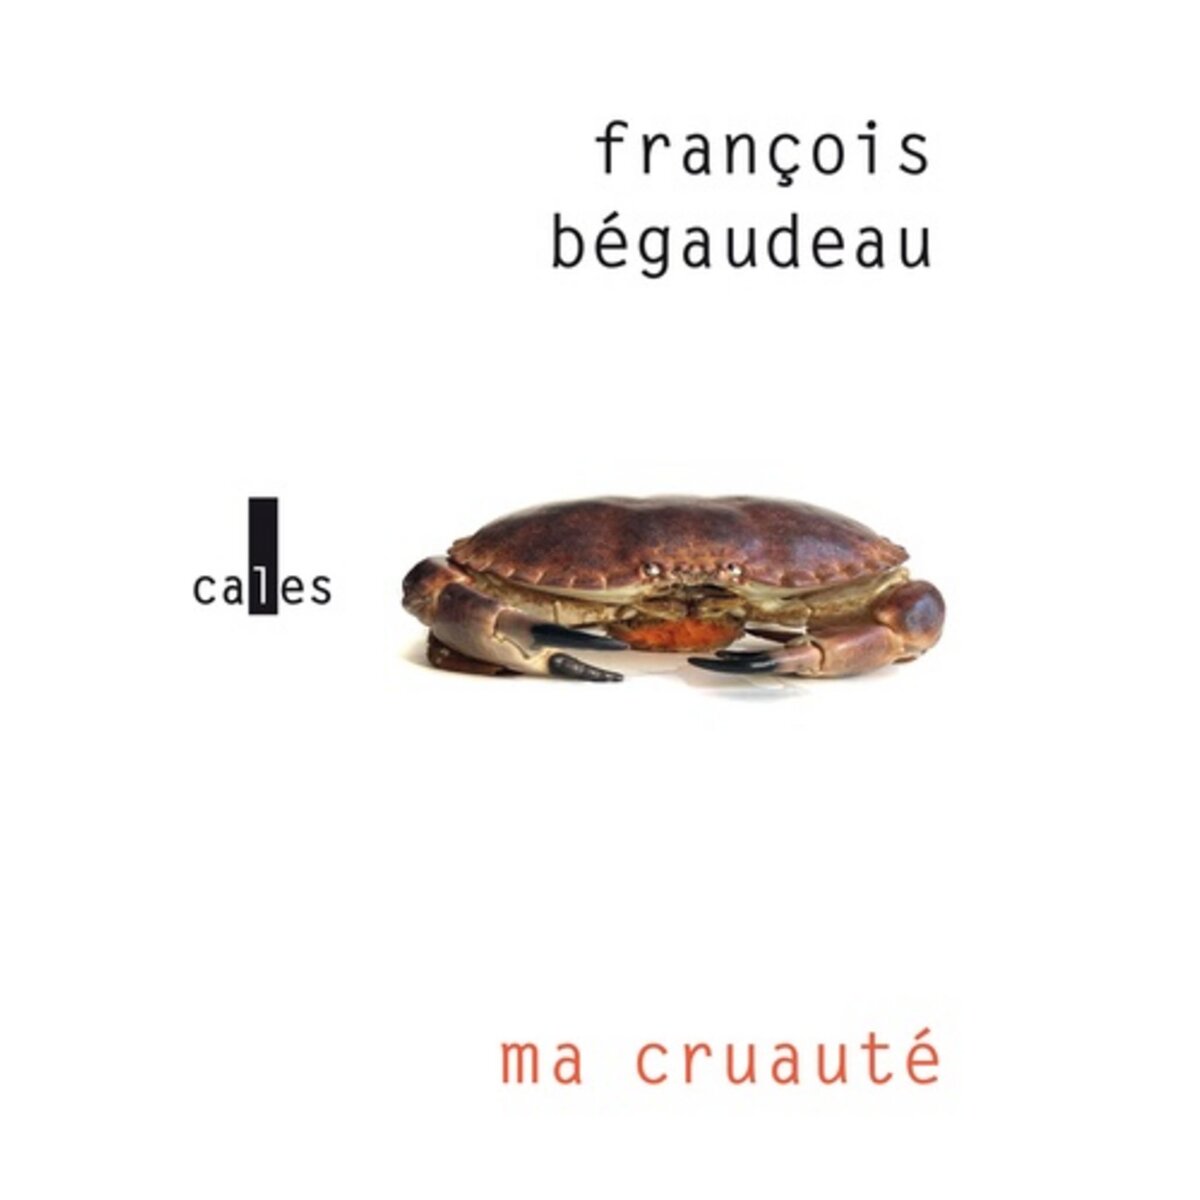  MA CRUAUTE, Bégaudeau François